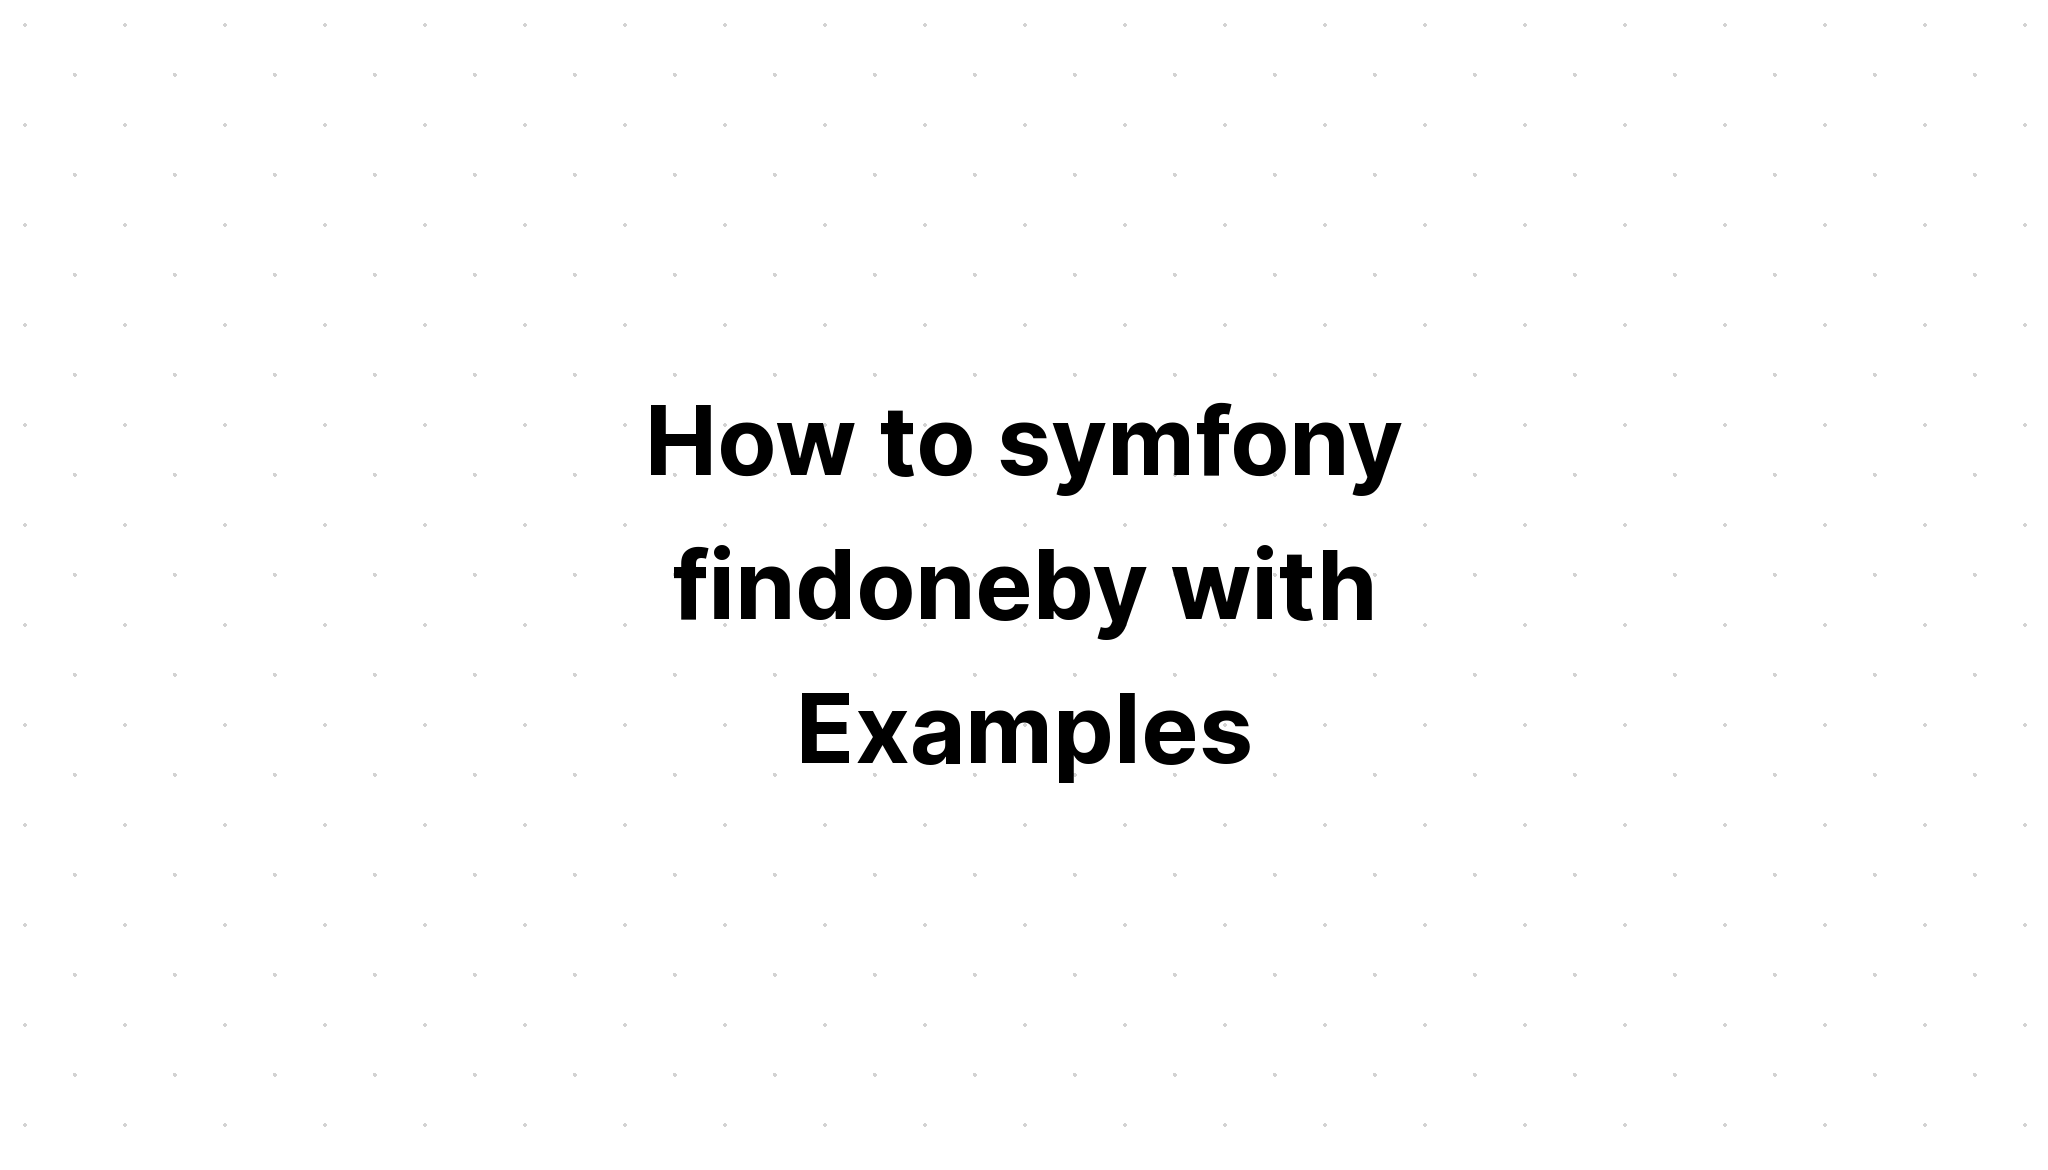 Cara symfony findoneby dengan Contoh